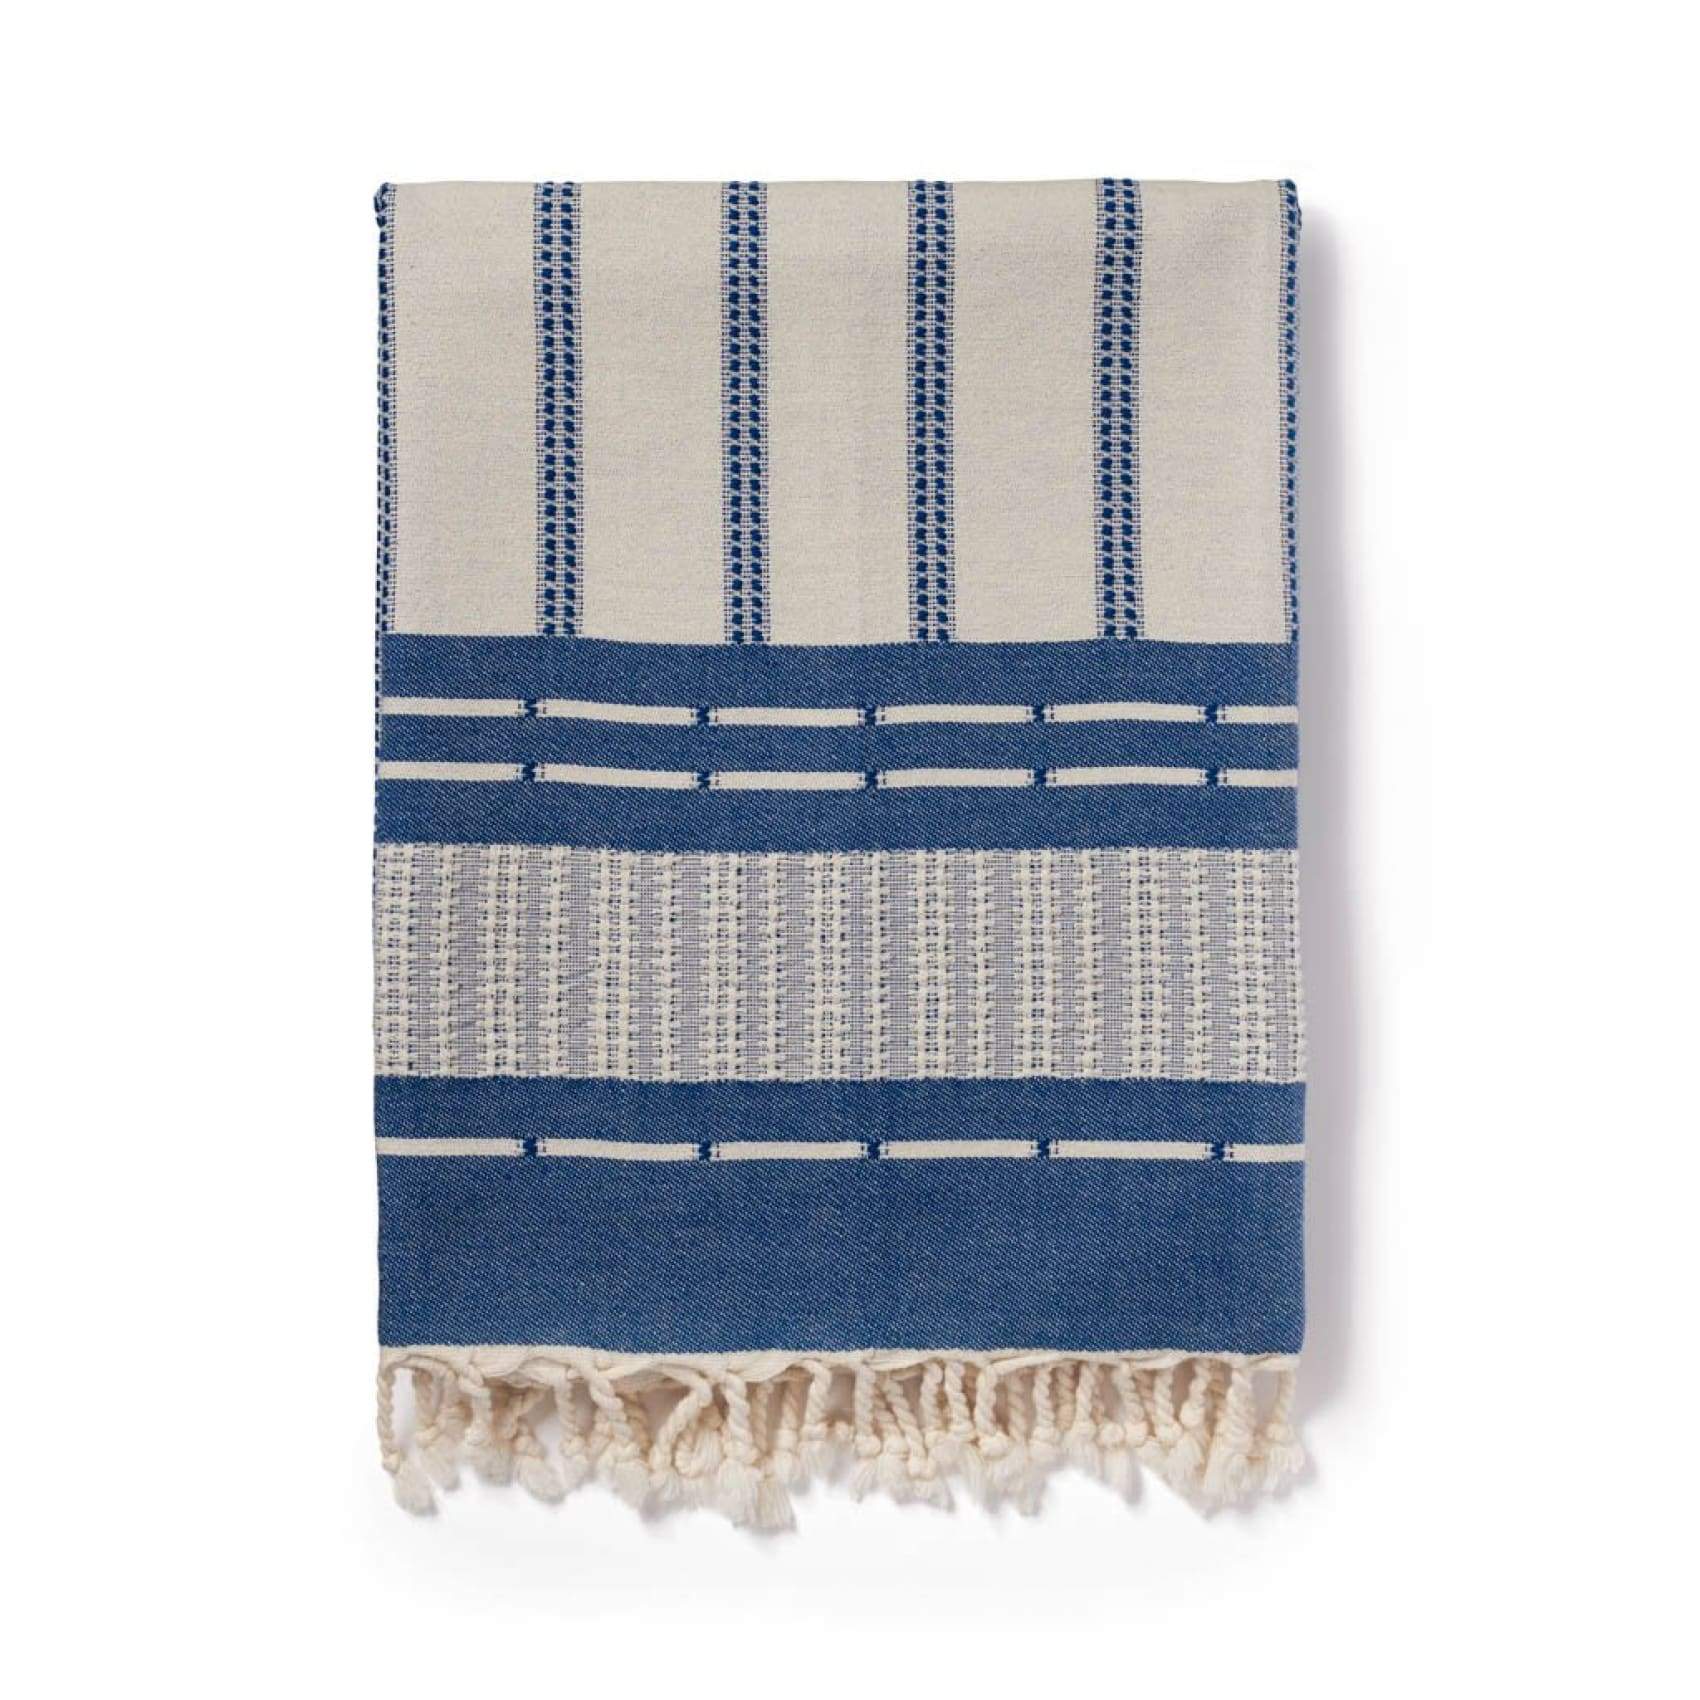 defne-deluxe-organic-cotton-hamam-towel-denim-summersale-luks-linen-blue-plaid-494.jpg